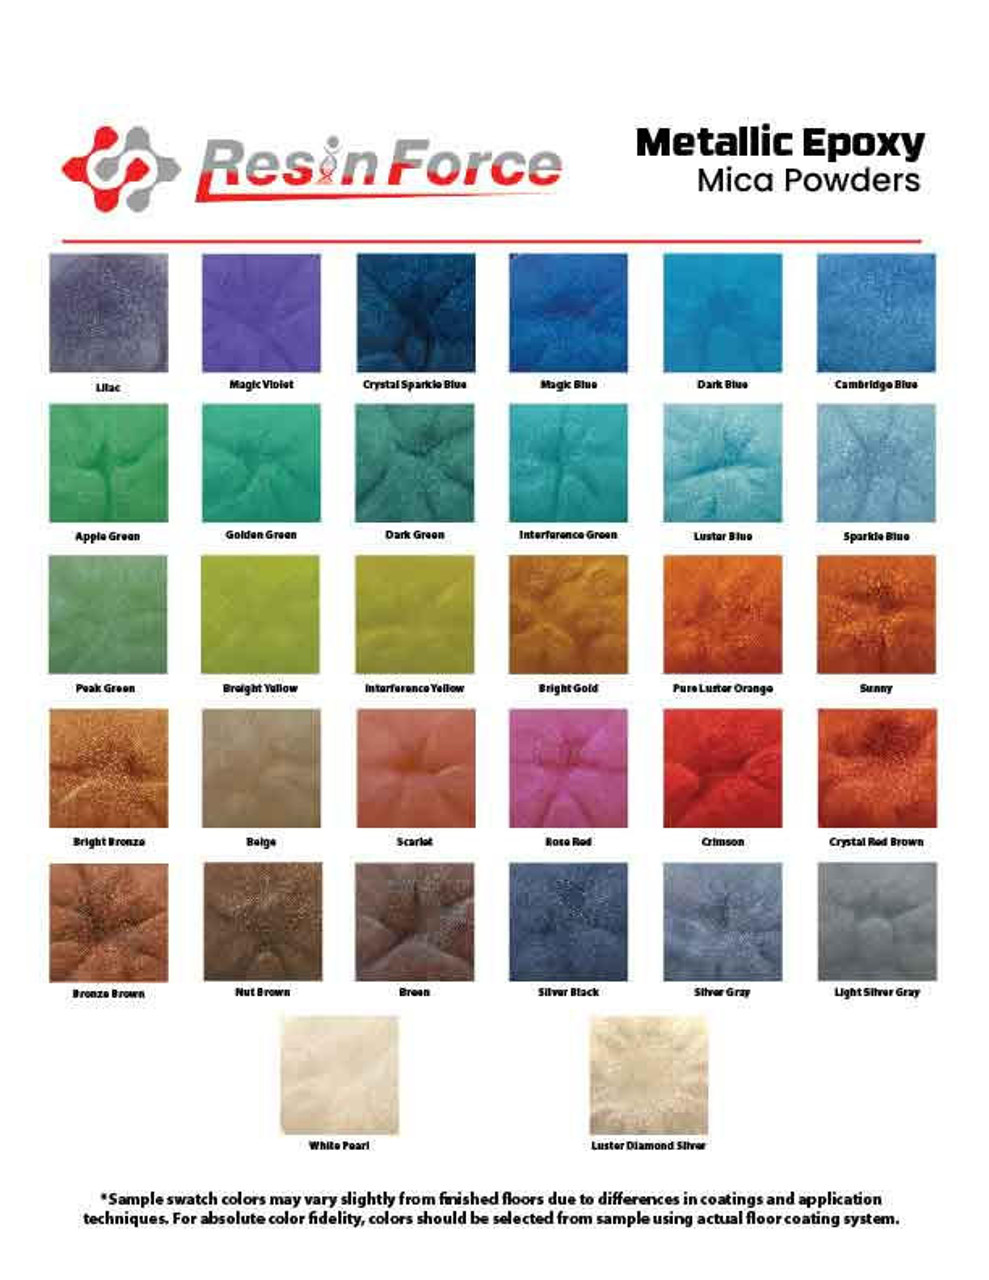 ResinForce Mica Powder for Metallic Epoxy Systems